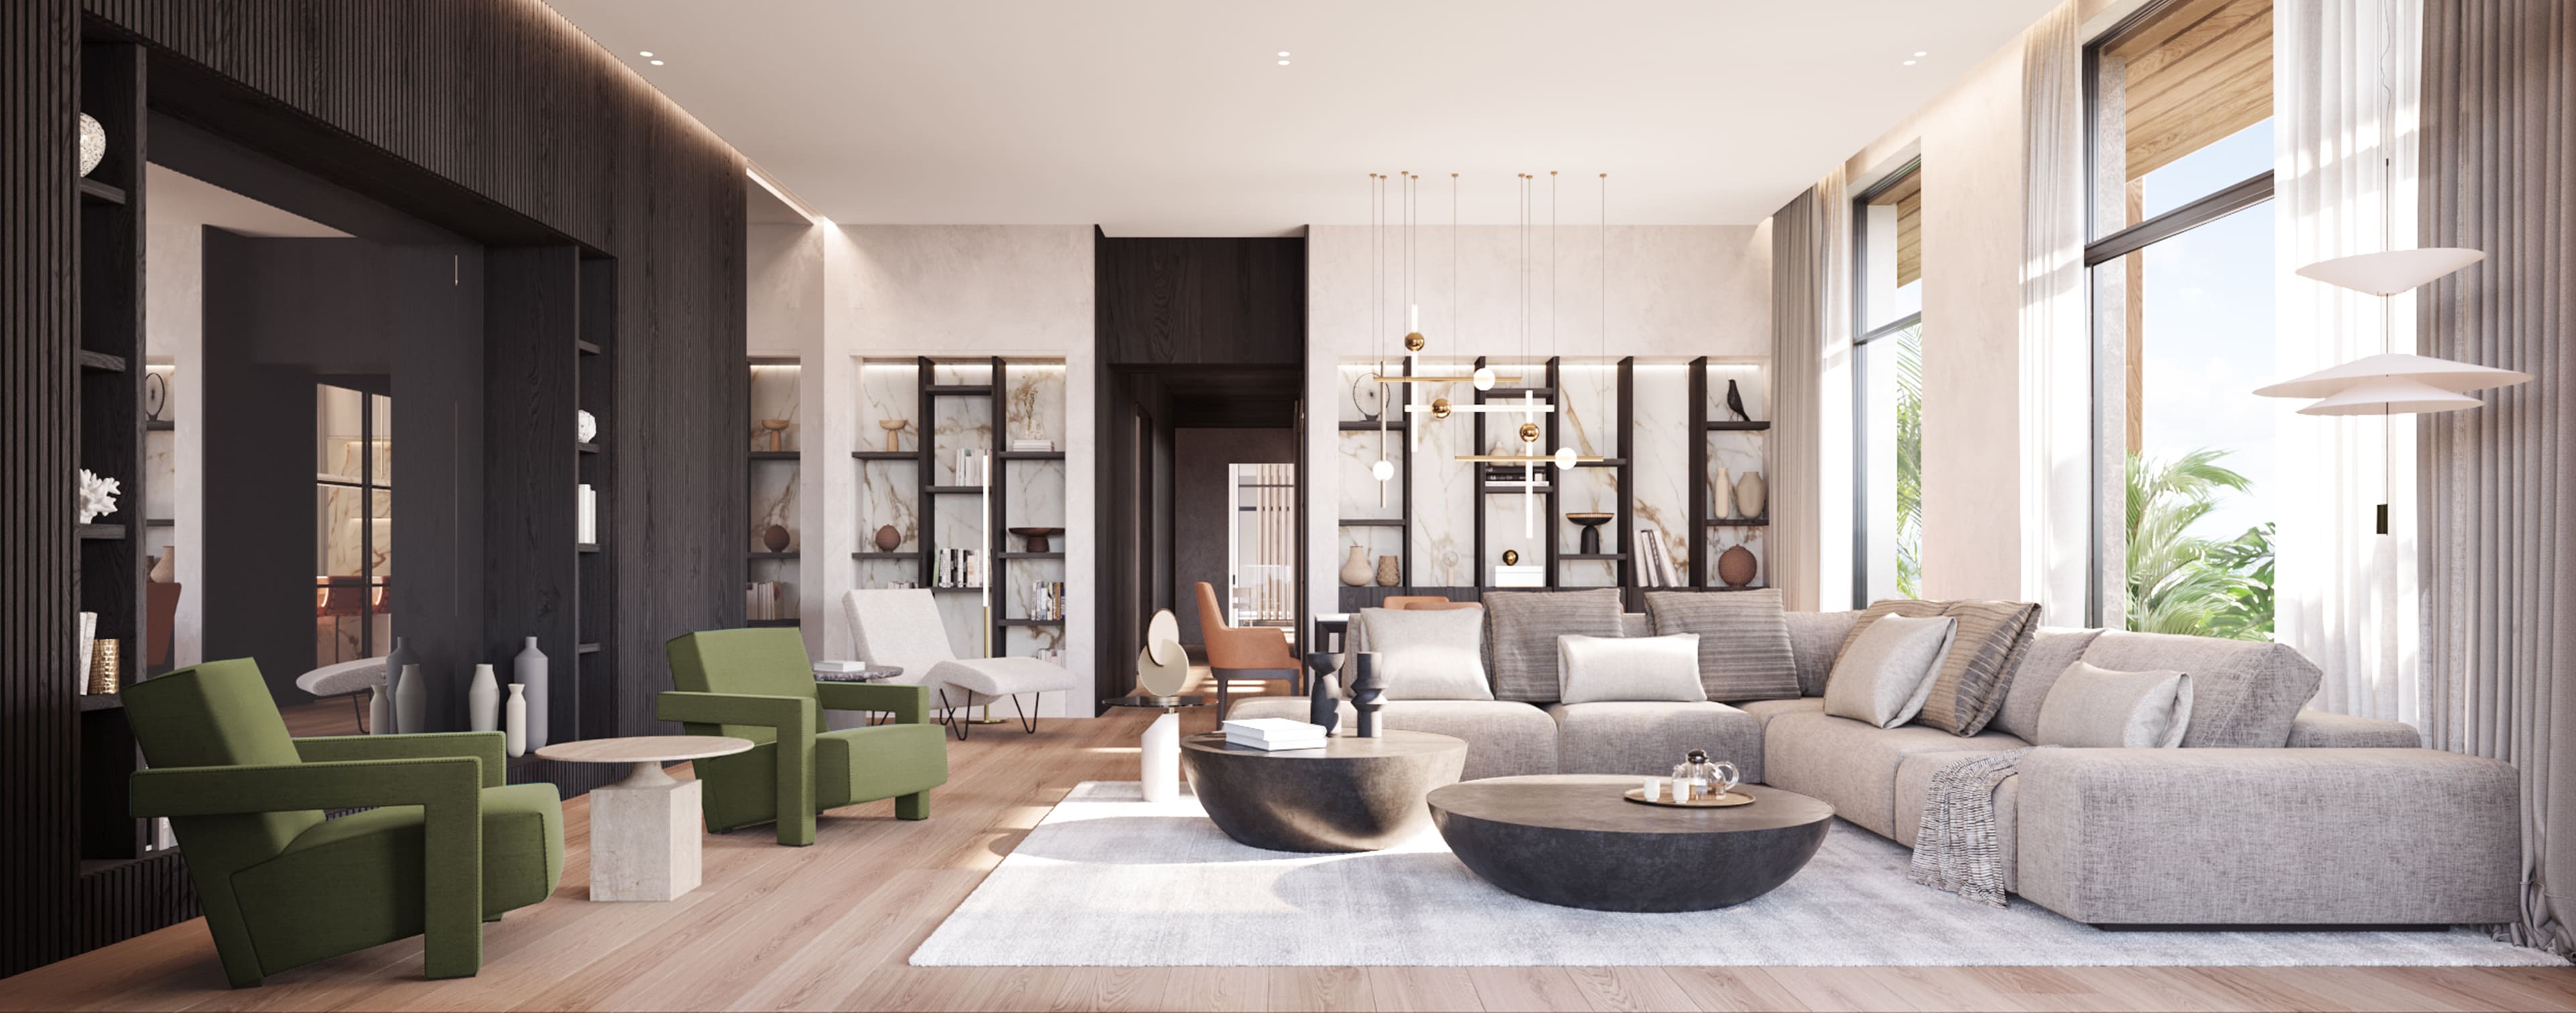 luv studio luxury architects dakar carlyle luxury residences IMG 01 - Carlyle Luxury Residences